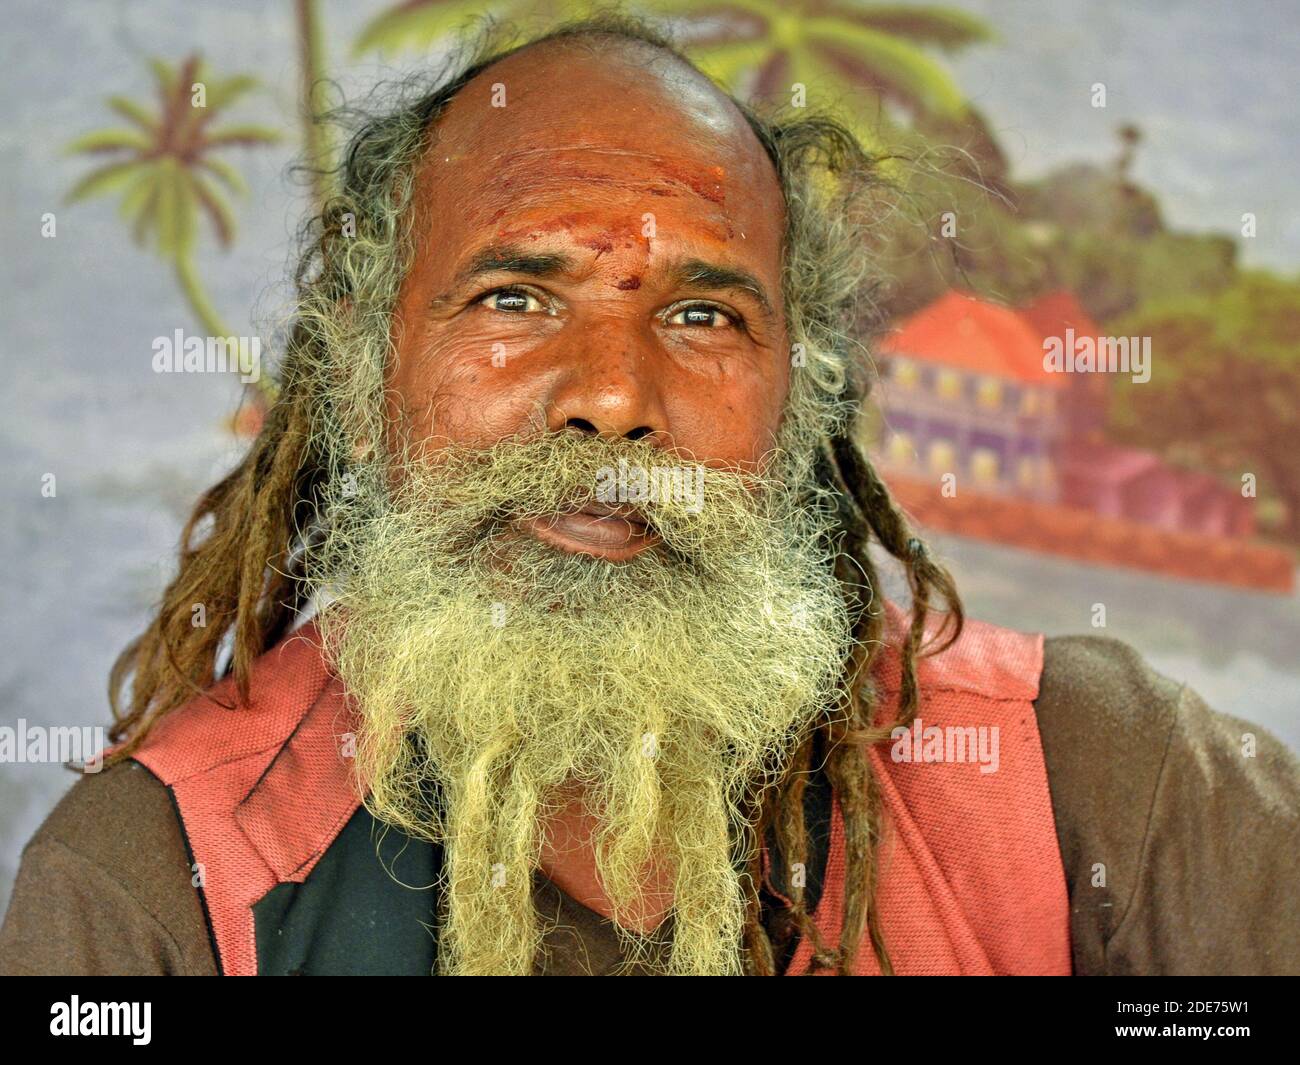 Elderly Indian Hindu Shaivite sadhu with rasta-style dreadlocks and beard poses for the camera during the Shivratri Mela (Bhavnath Fair). Stock Photo